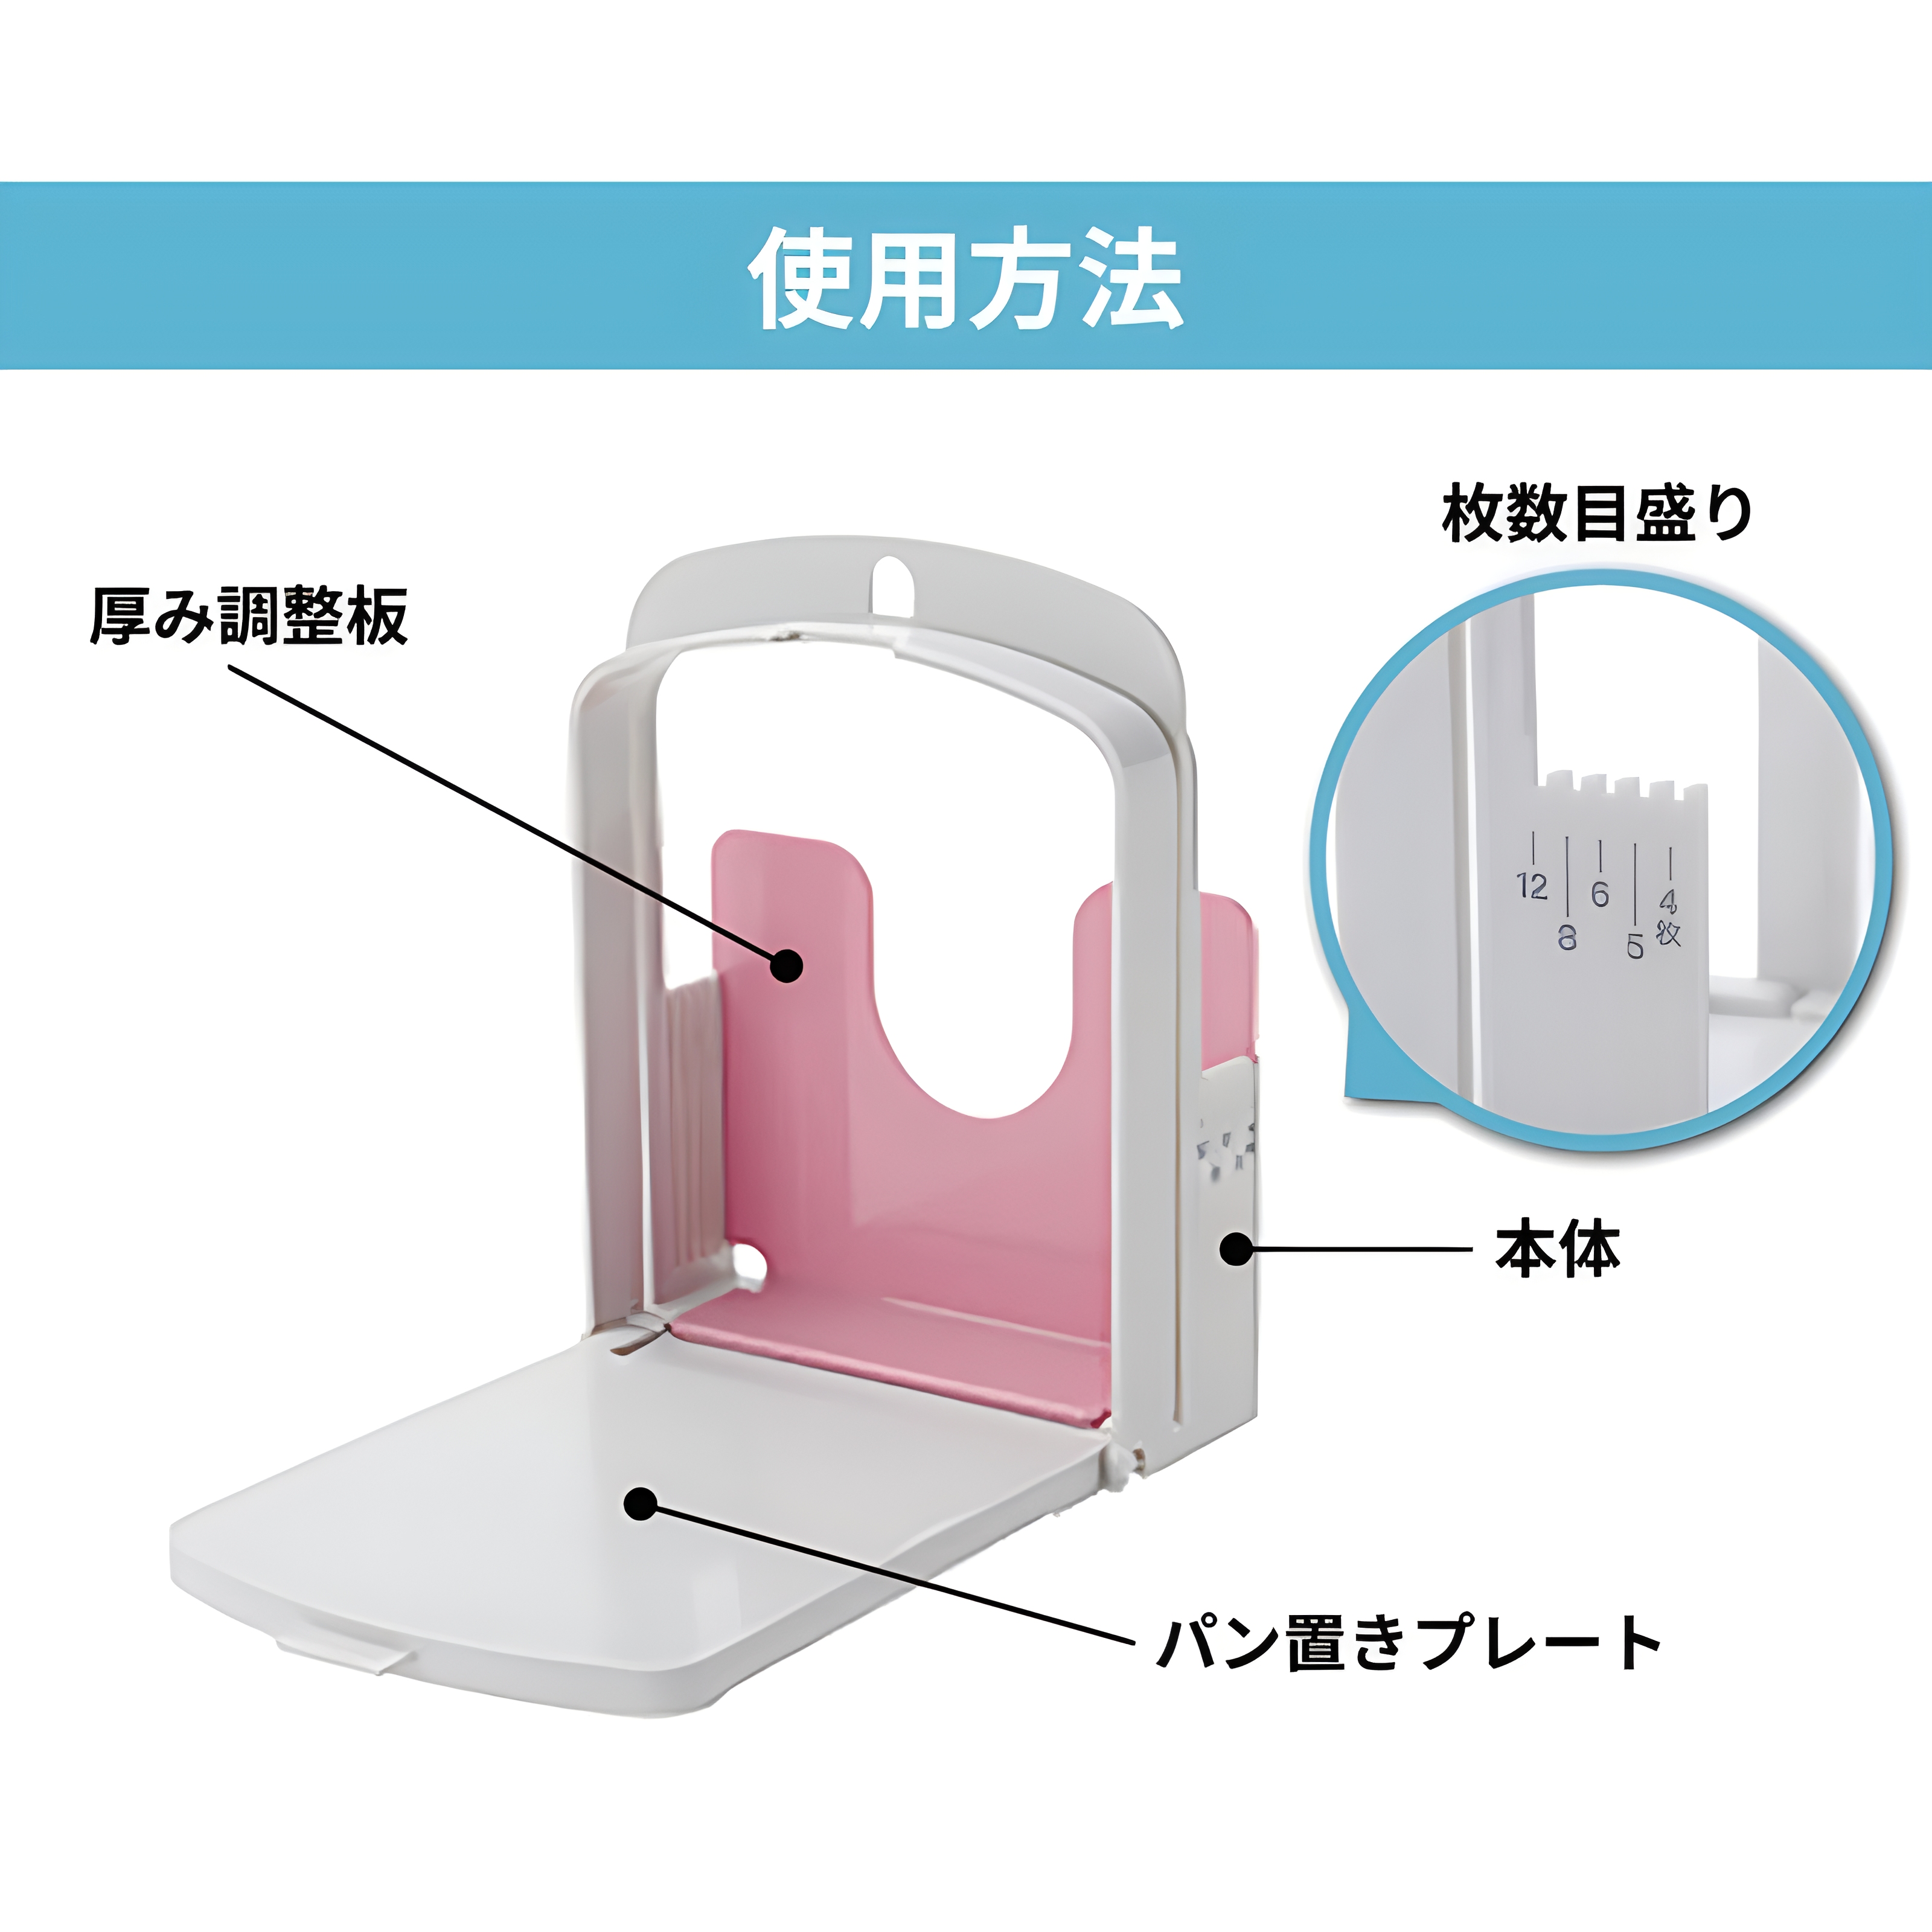 ISETO 日本进口面包切片器厨房烘焙用具切面包器浅蓝色粉红色详情图3